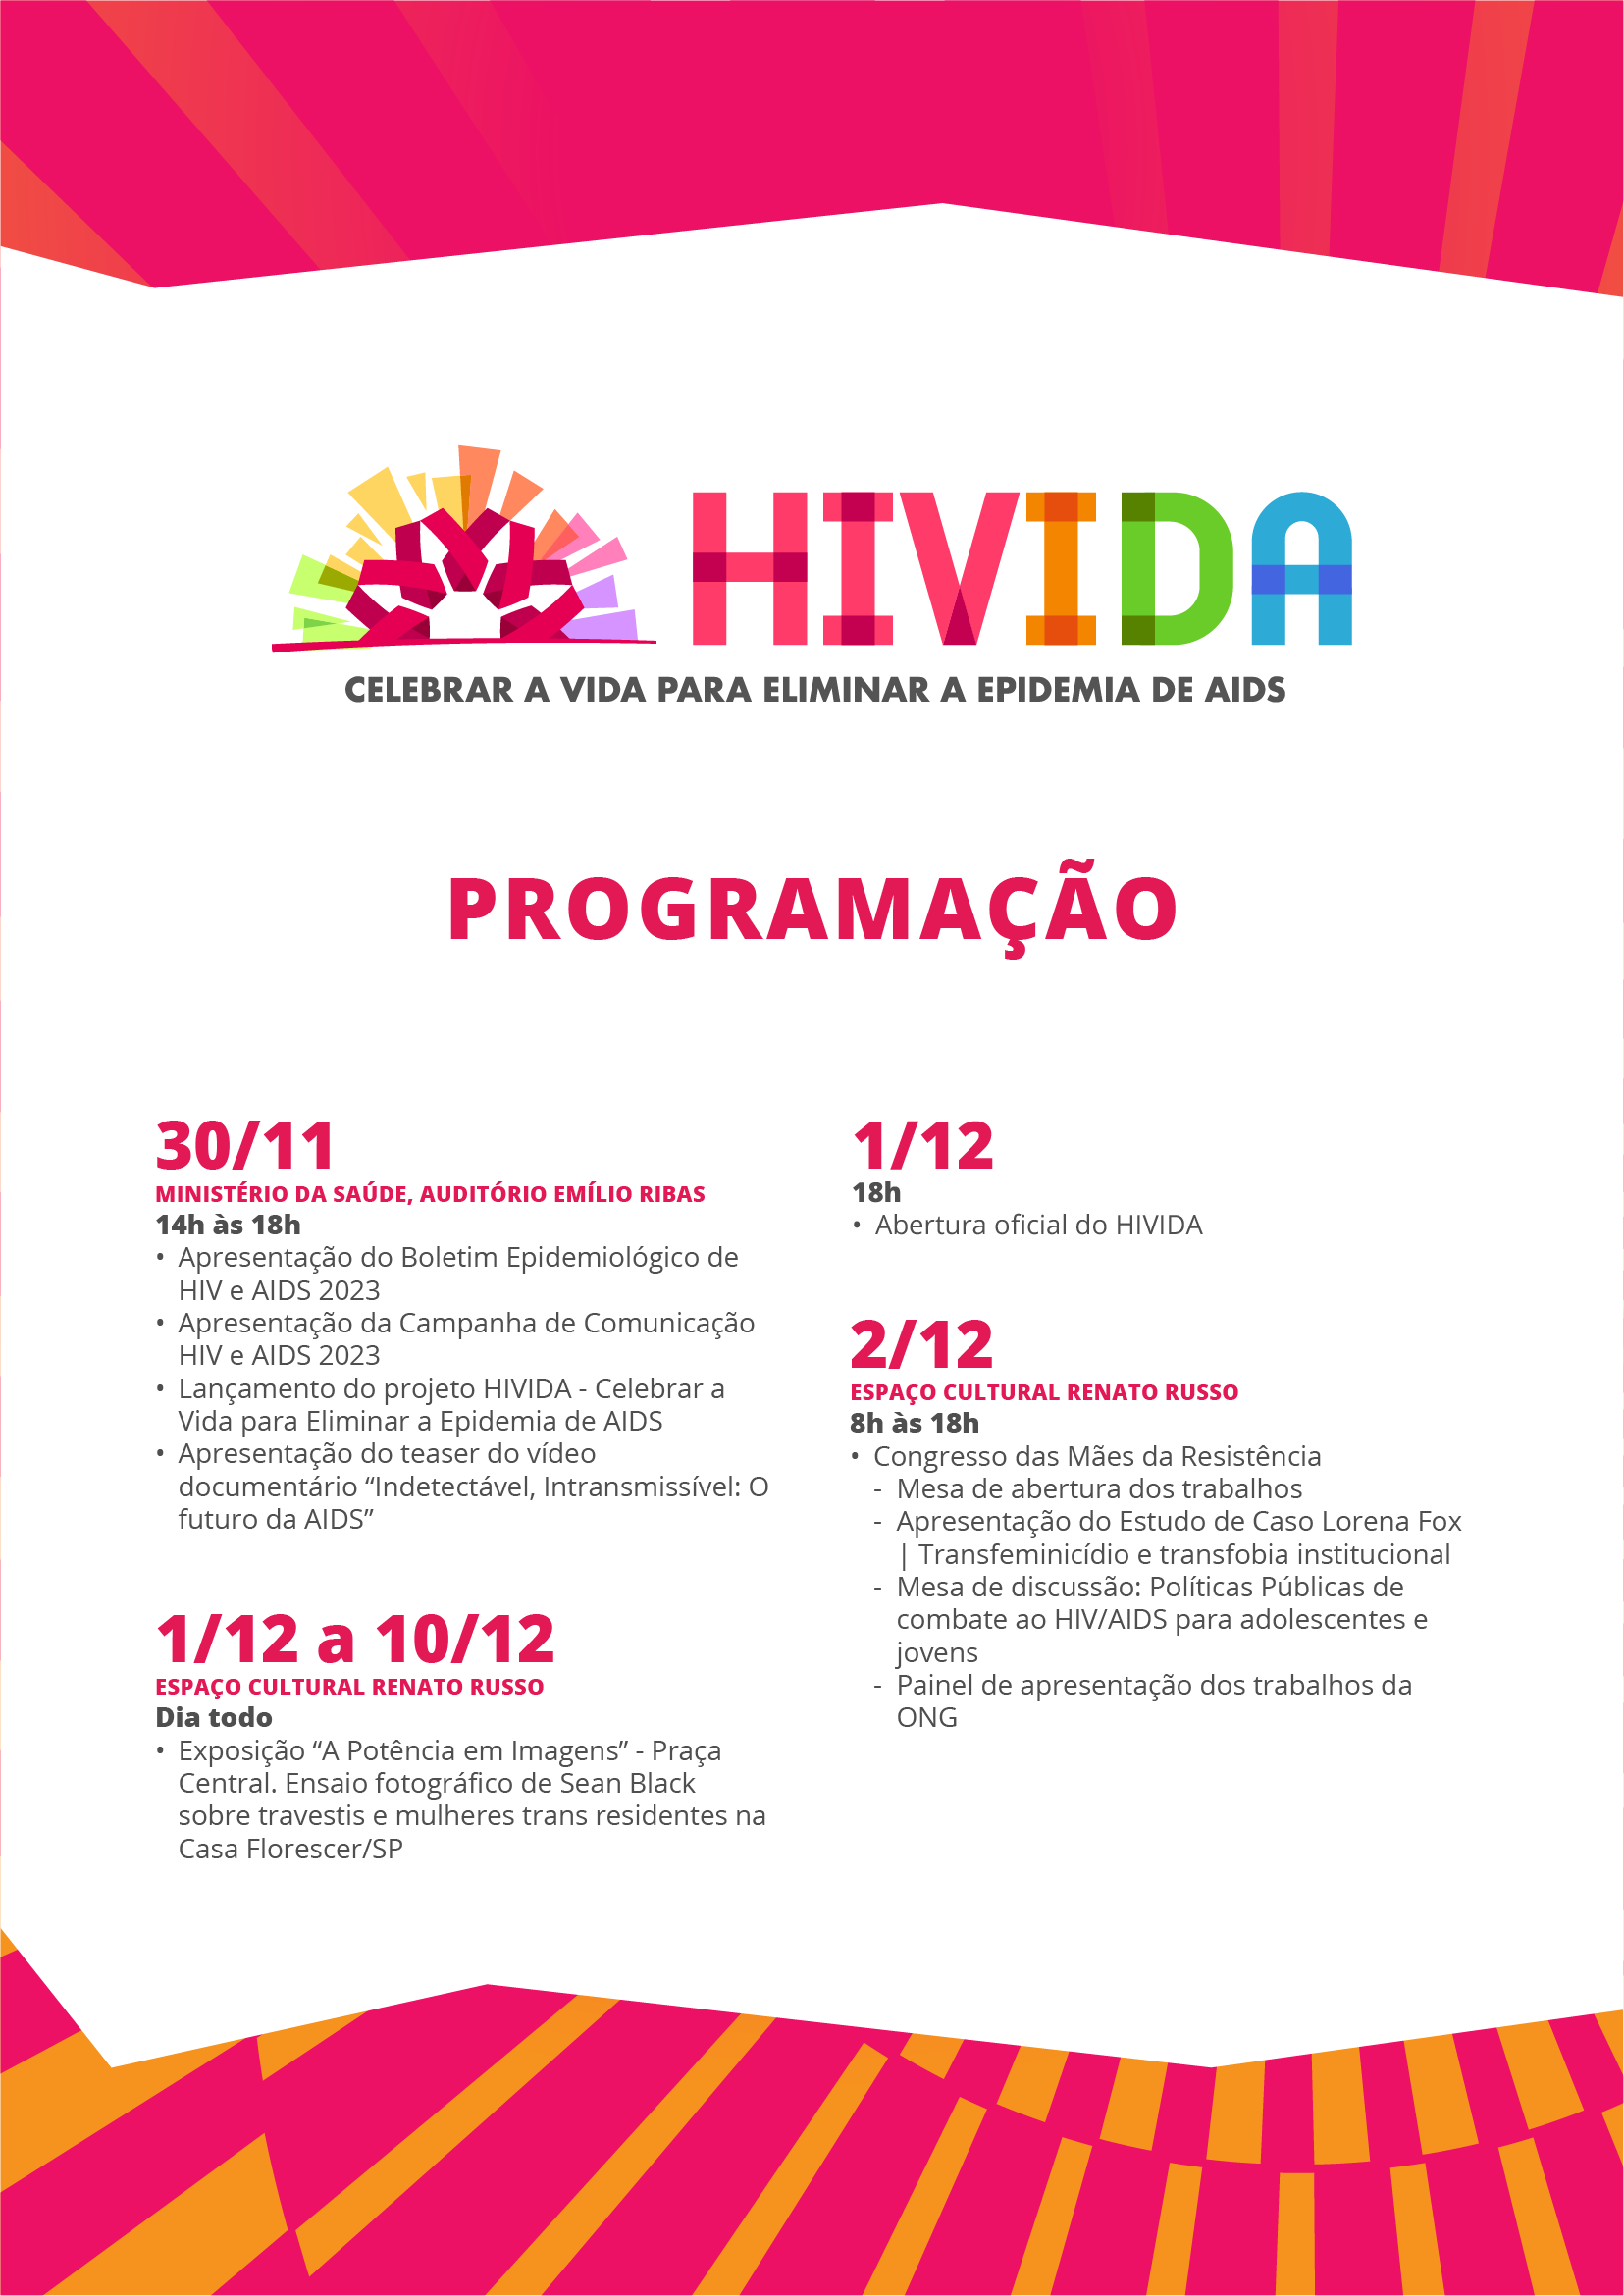 HIVIDA - Programação 1